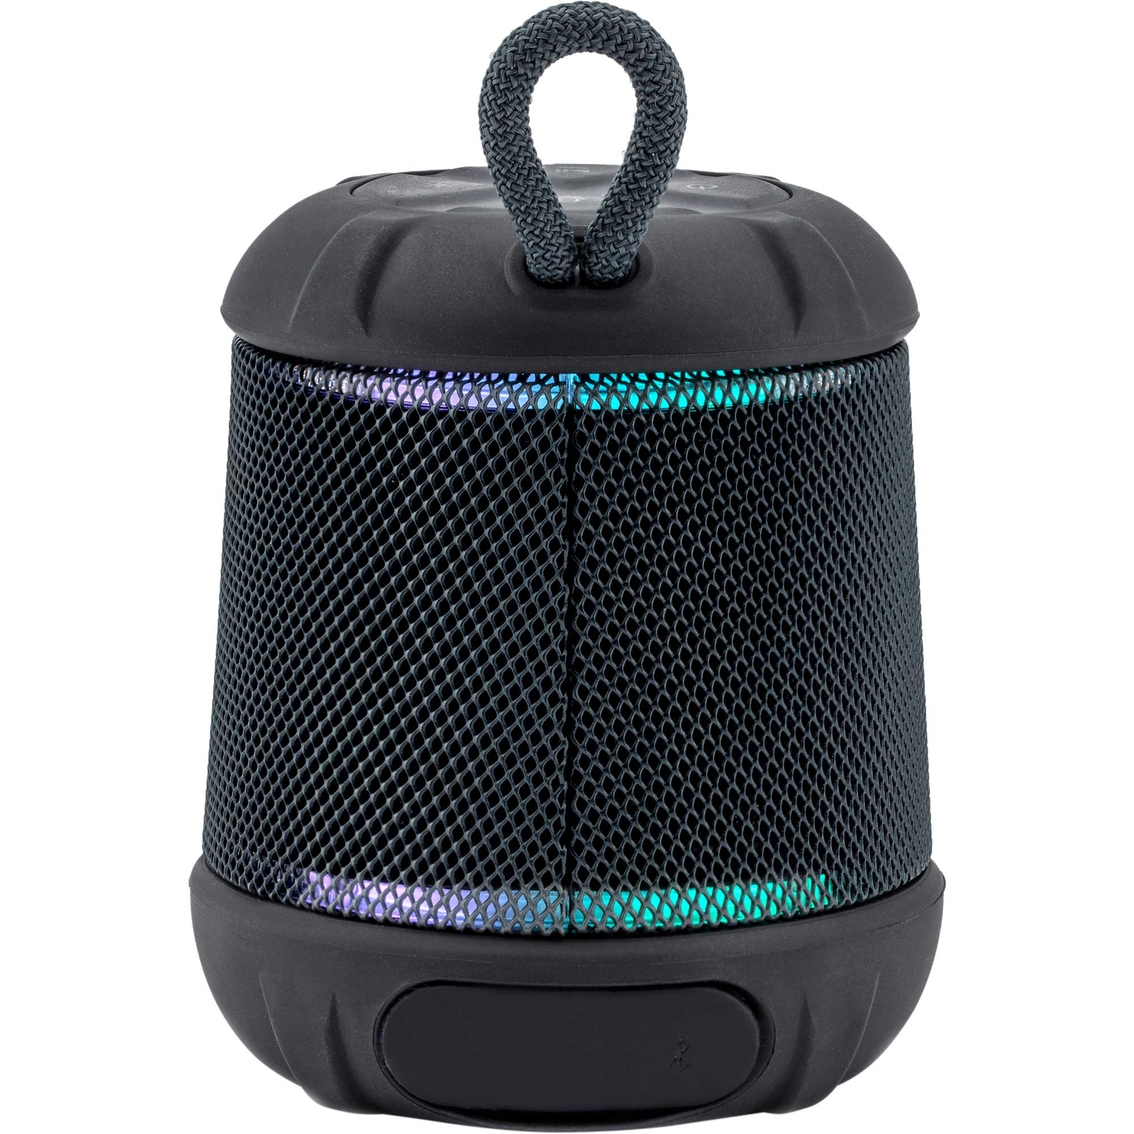 iHome PlayTough Waterproof, Shockproof Bluetooth Speaker with Accent Lighting - Image 4 of 10